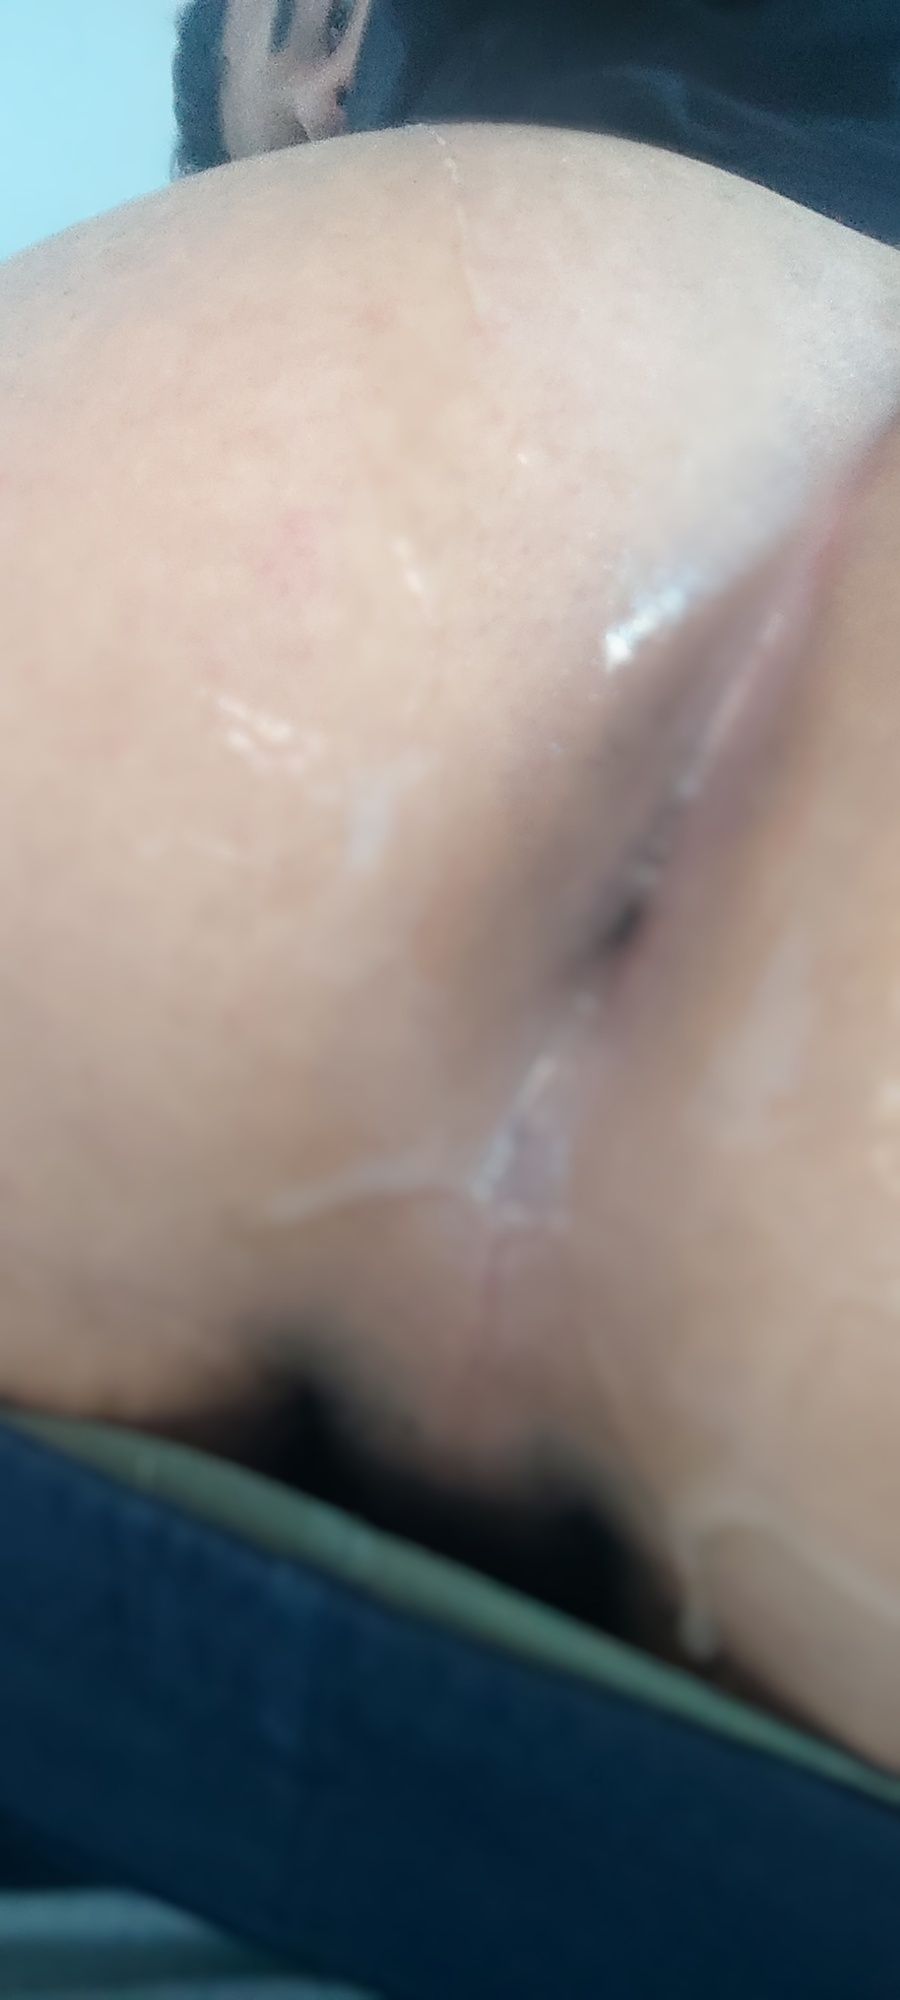 My tight Virgin femboy hole dripping cum #6